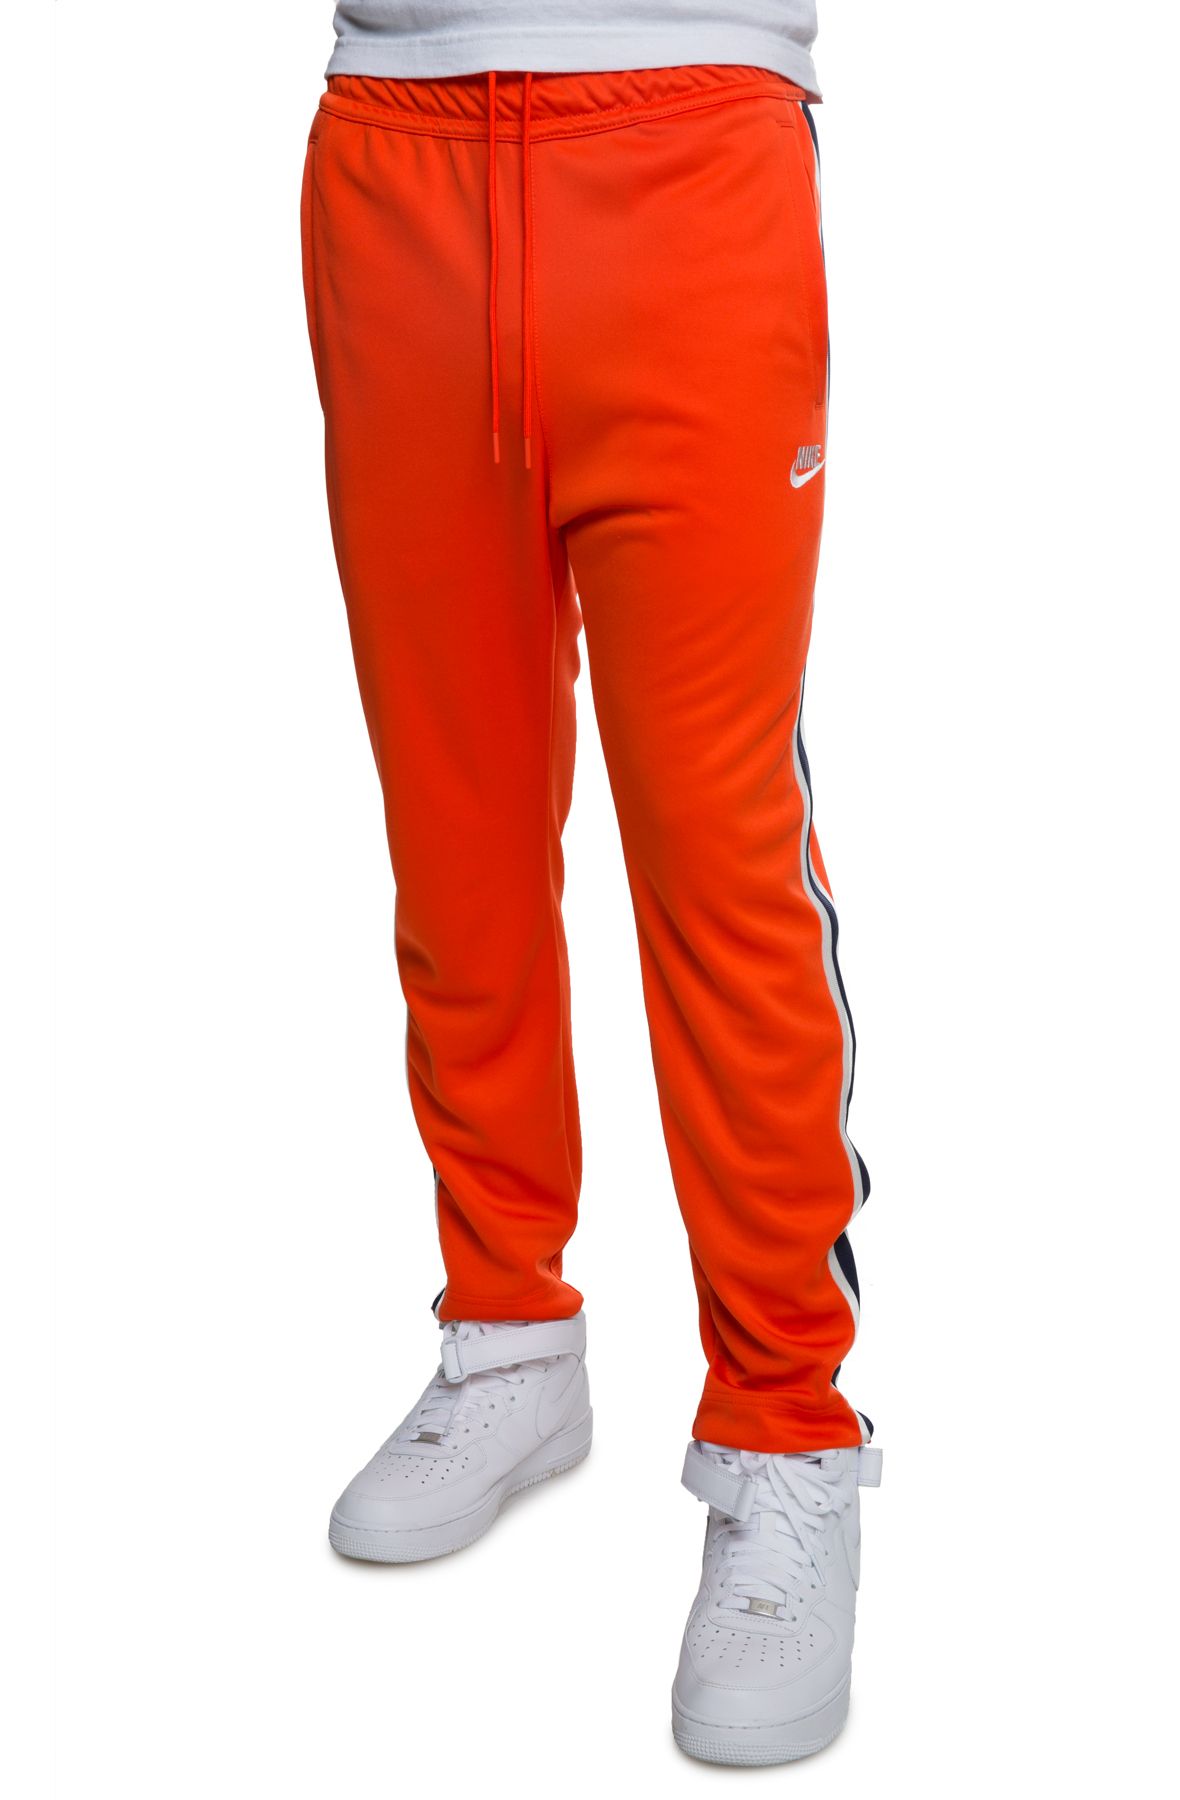 orange nike track pants online -